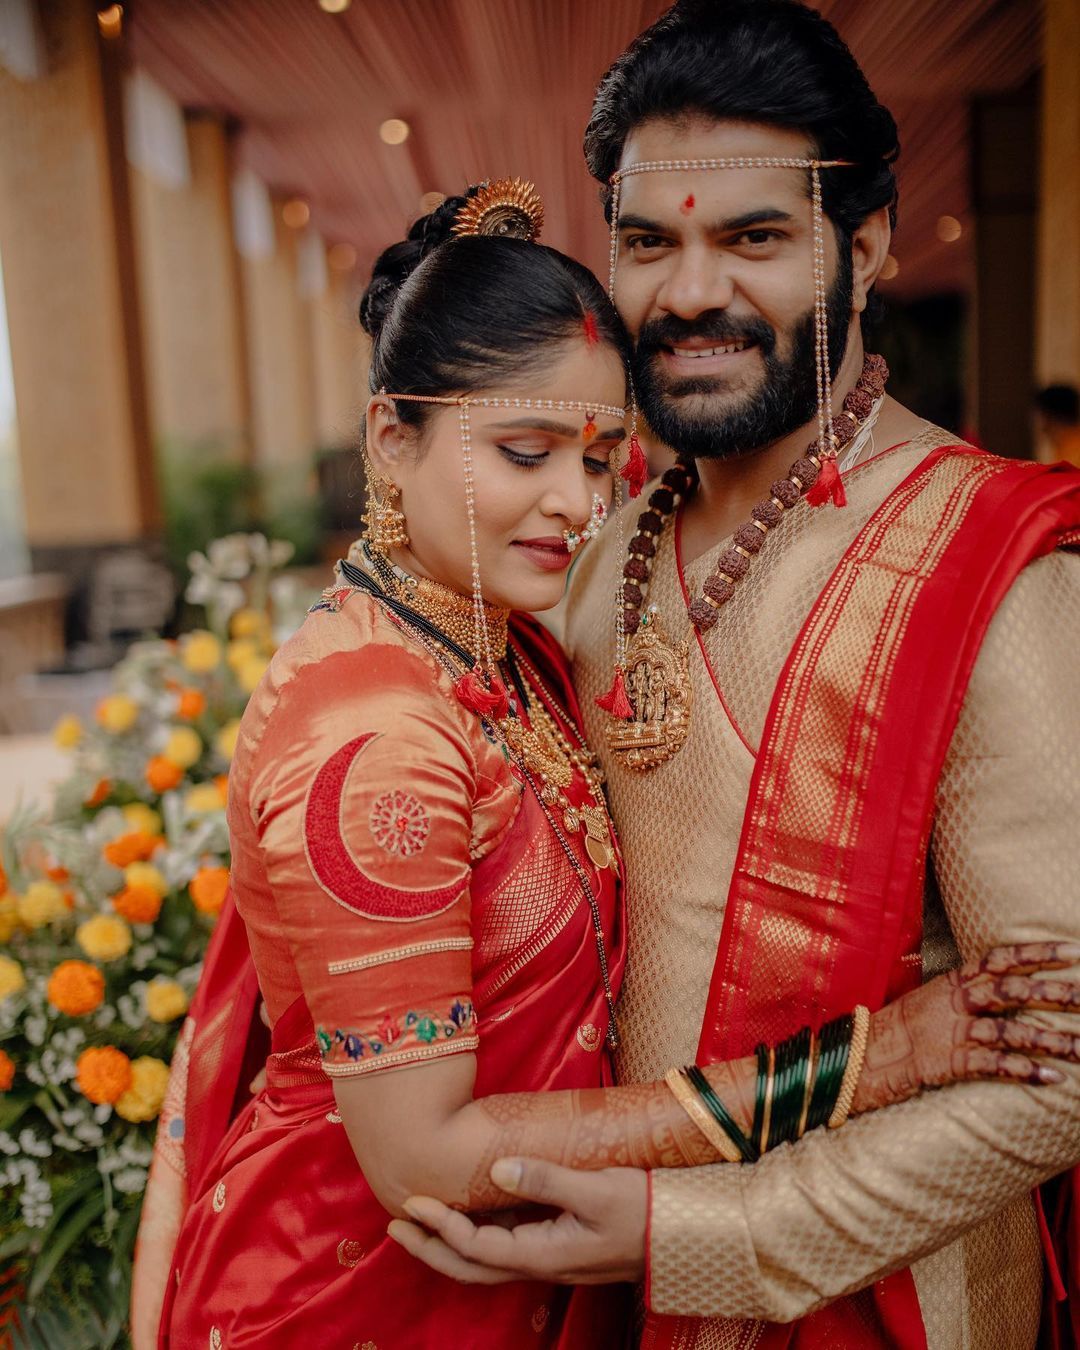 Akshaya Deodhar and her husband, Hardeek Joshi